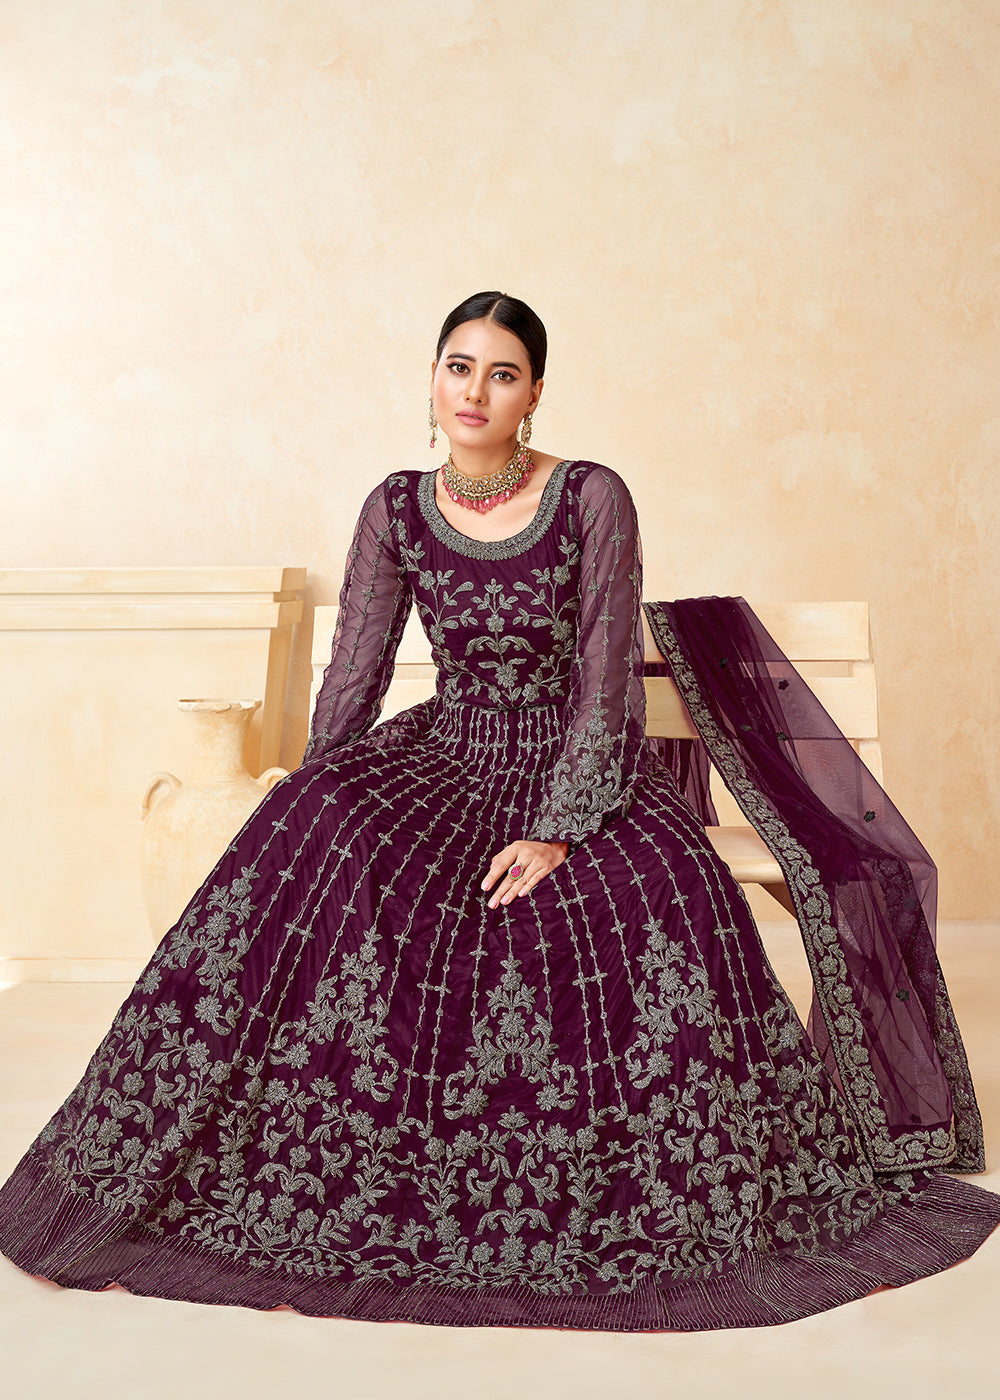 Buy Now Alluring Wine Purple Net Wedding Wear Anarkali Dress Online in USA, UK, Australia, New Zealand, Canada & Worldwide at Empress Clothing.